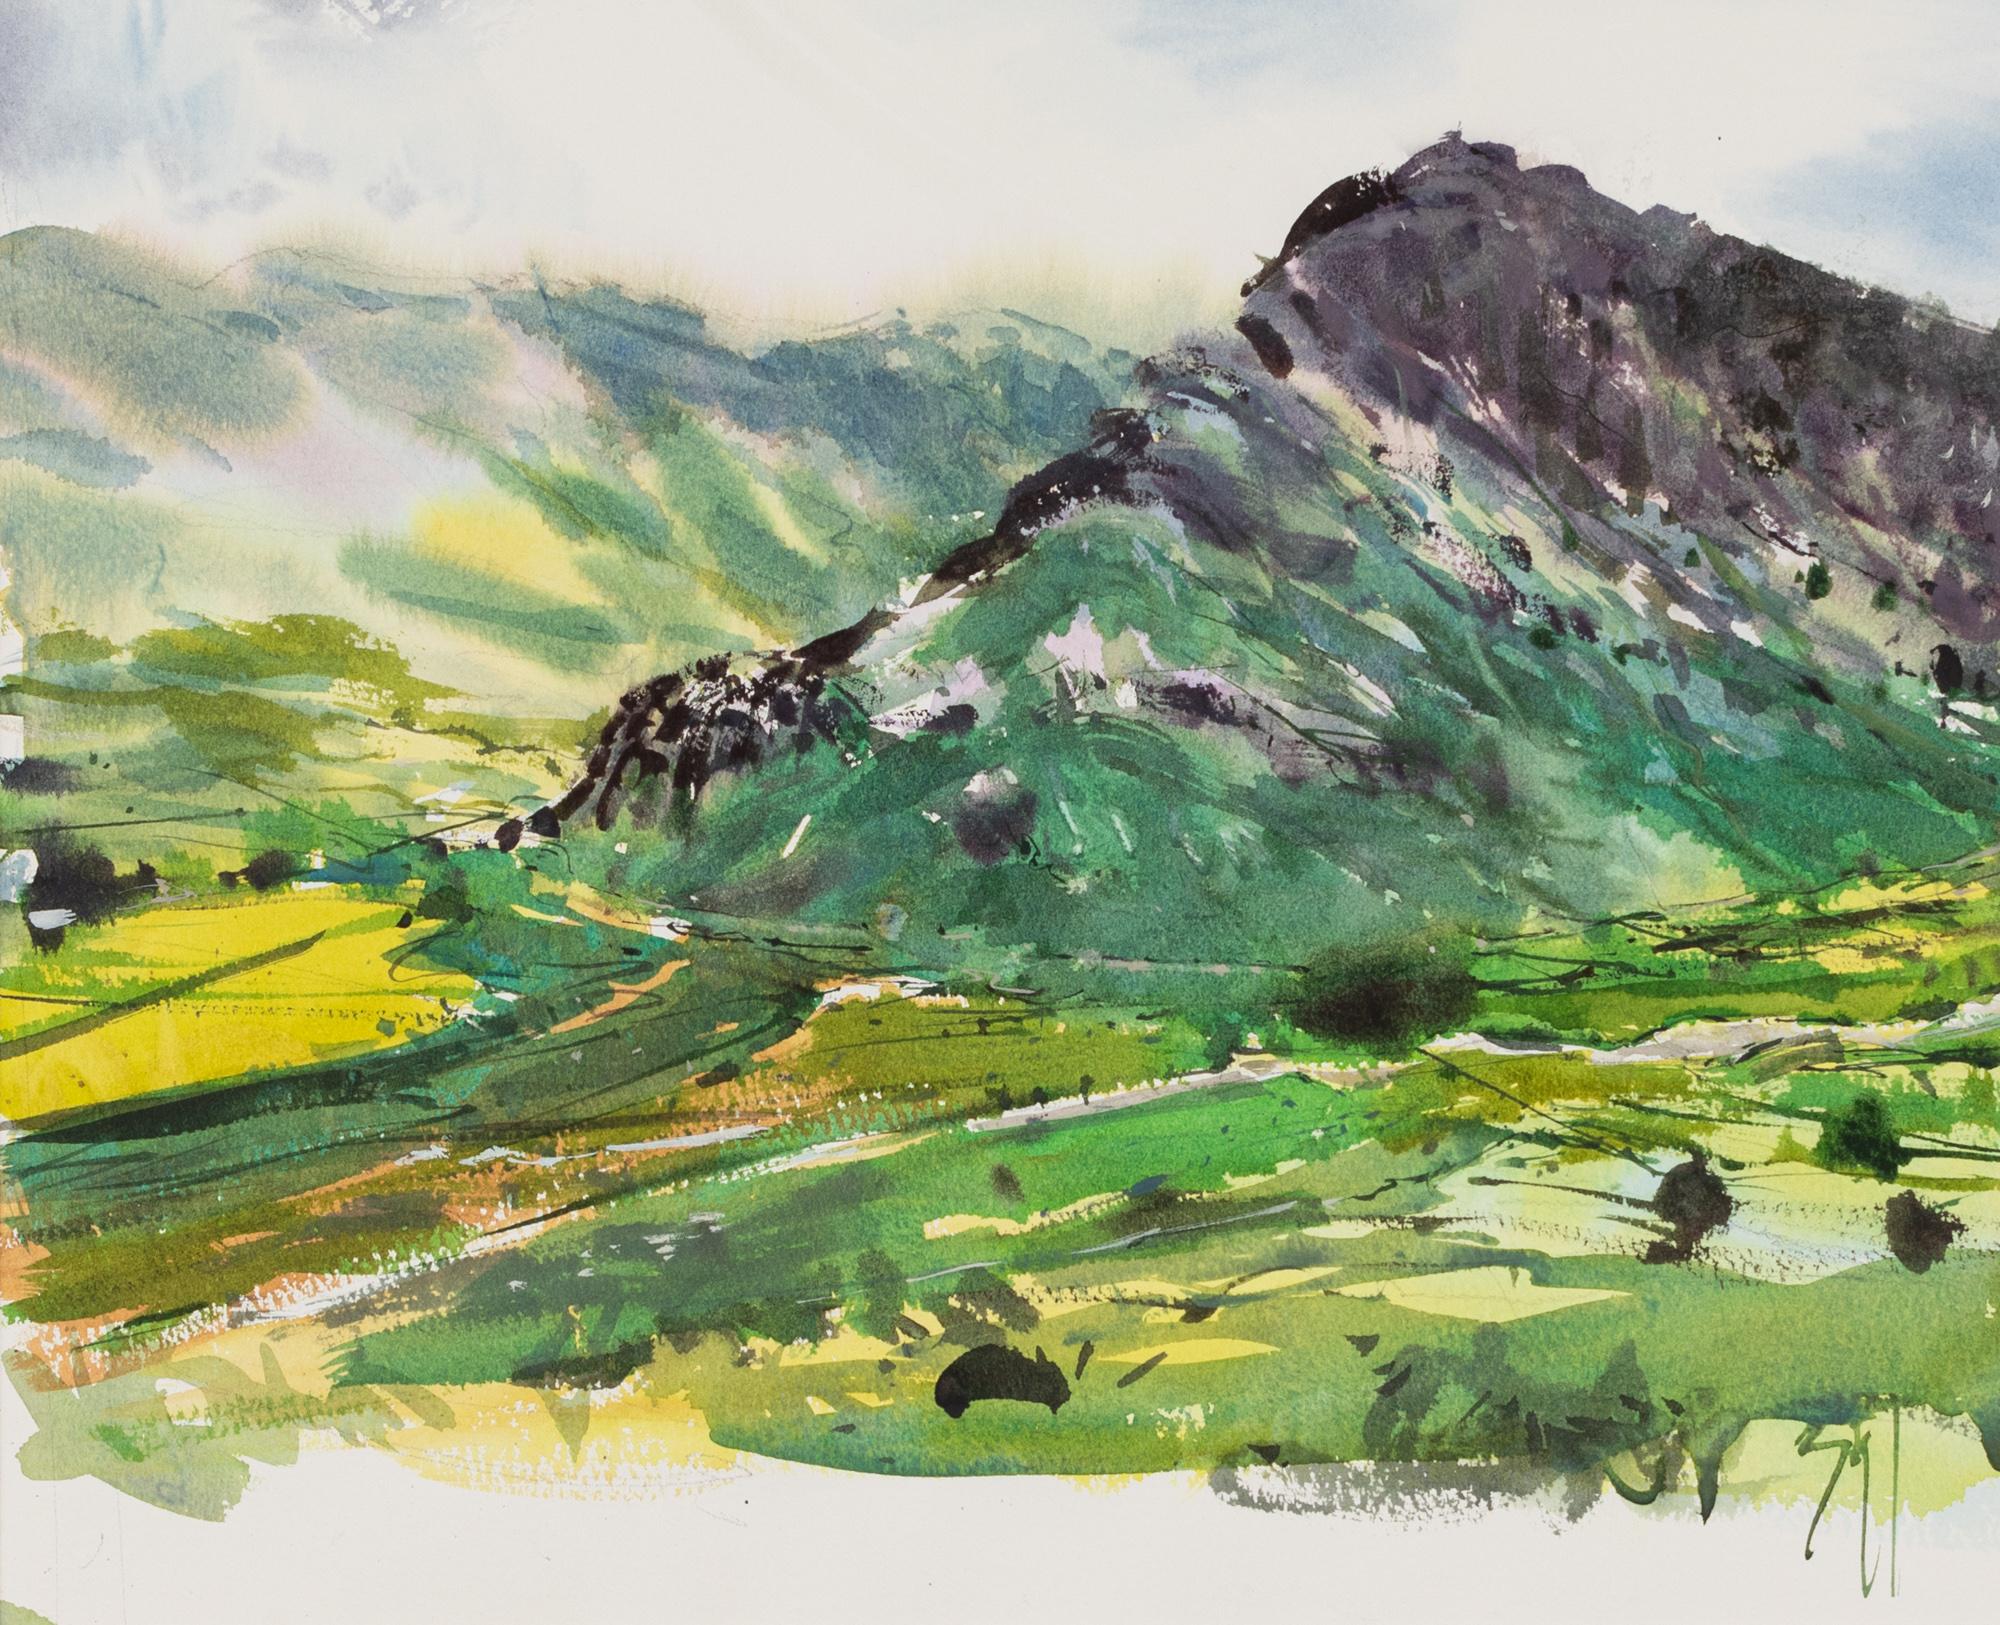 Uma Kelkar Landscape Painting - "Lake District 1" A Watercolor Painting of Gatesgarth Mountain Range in UK